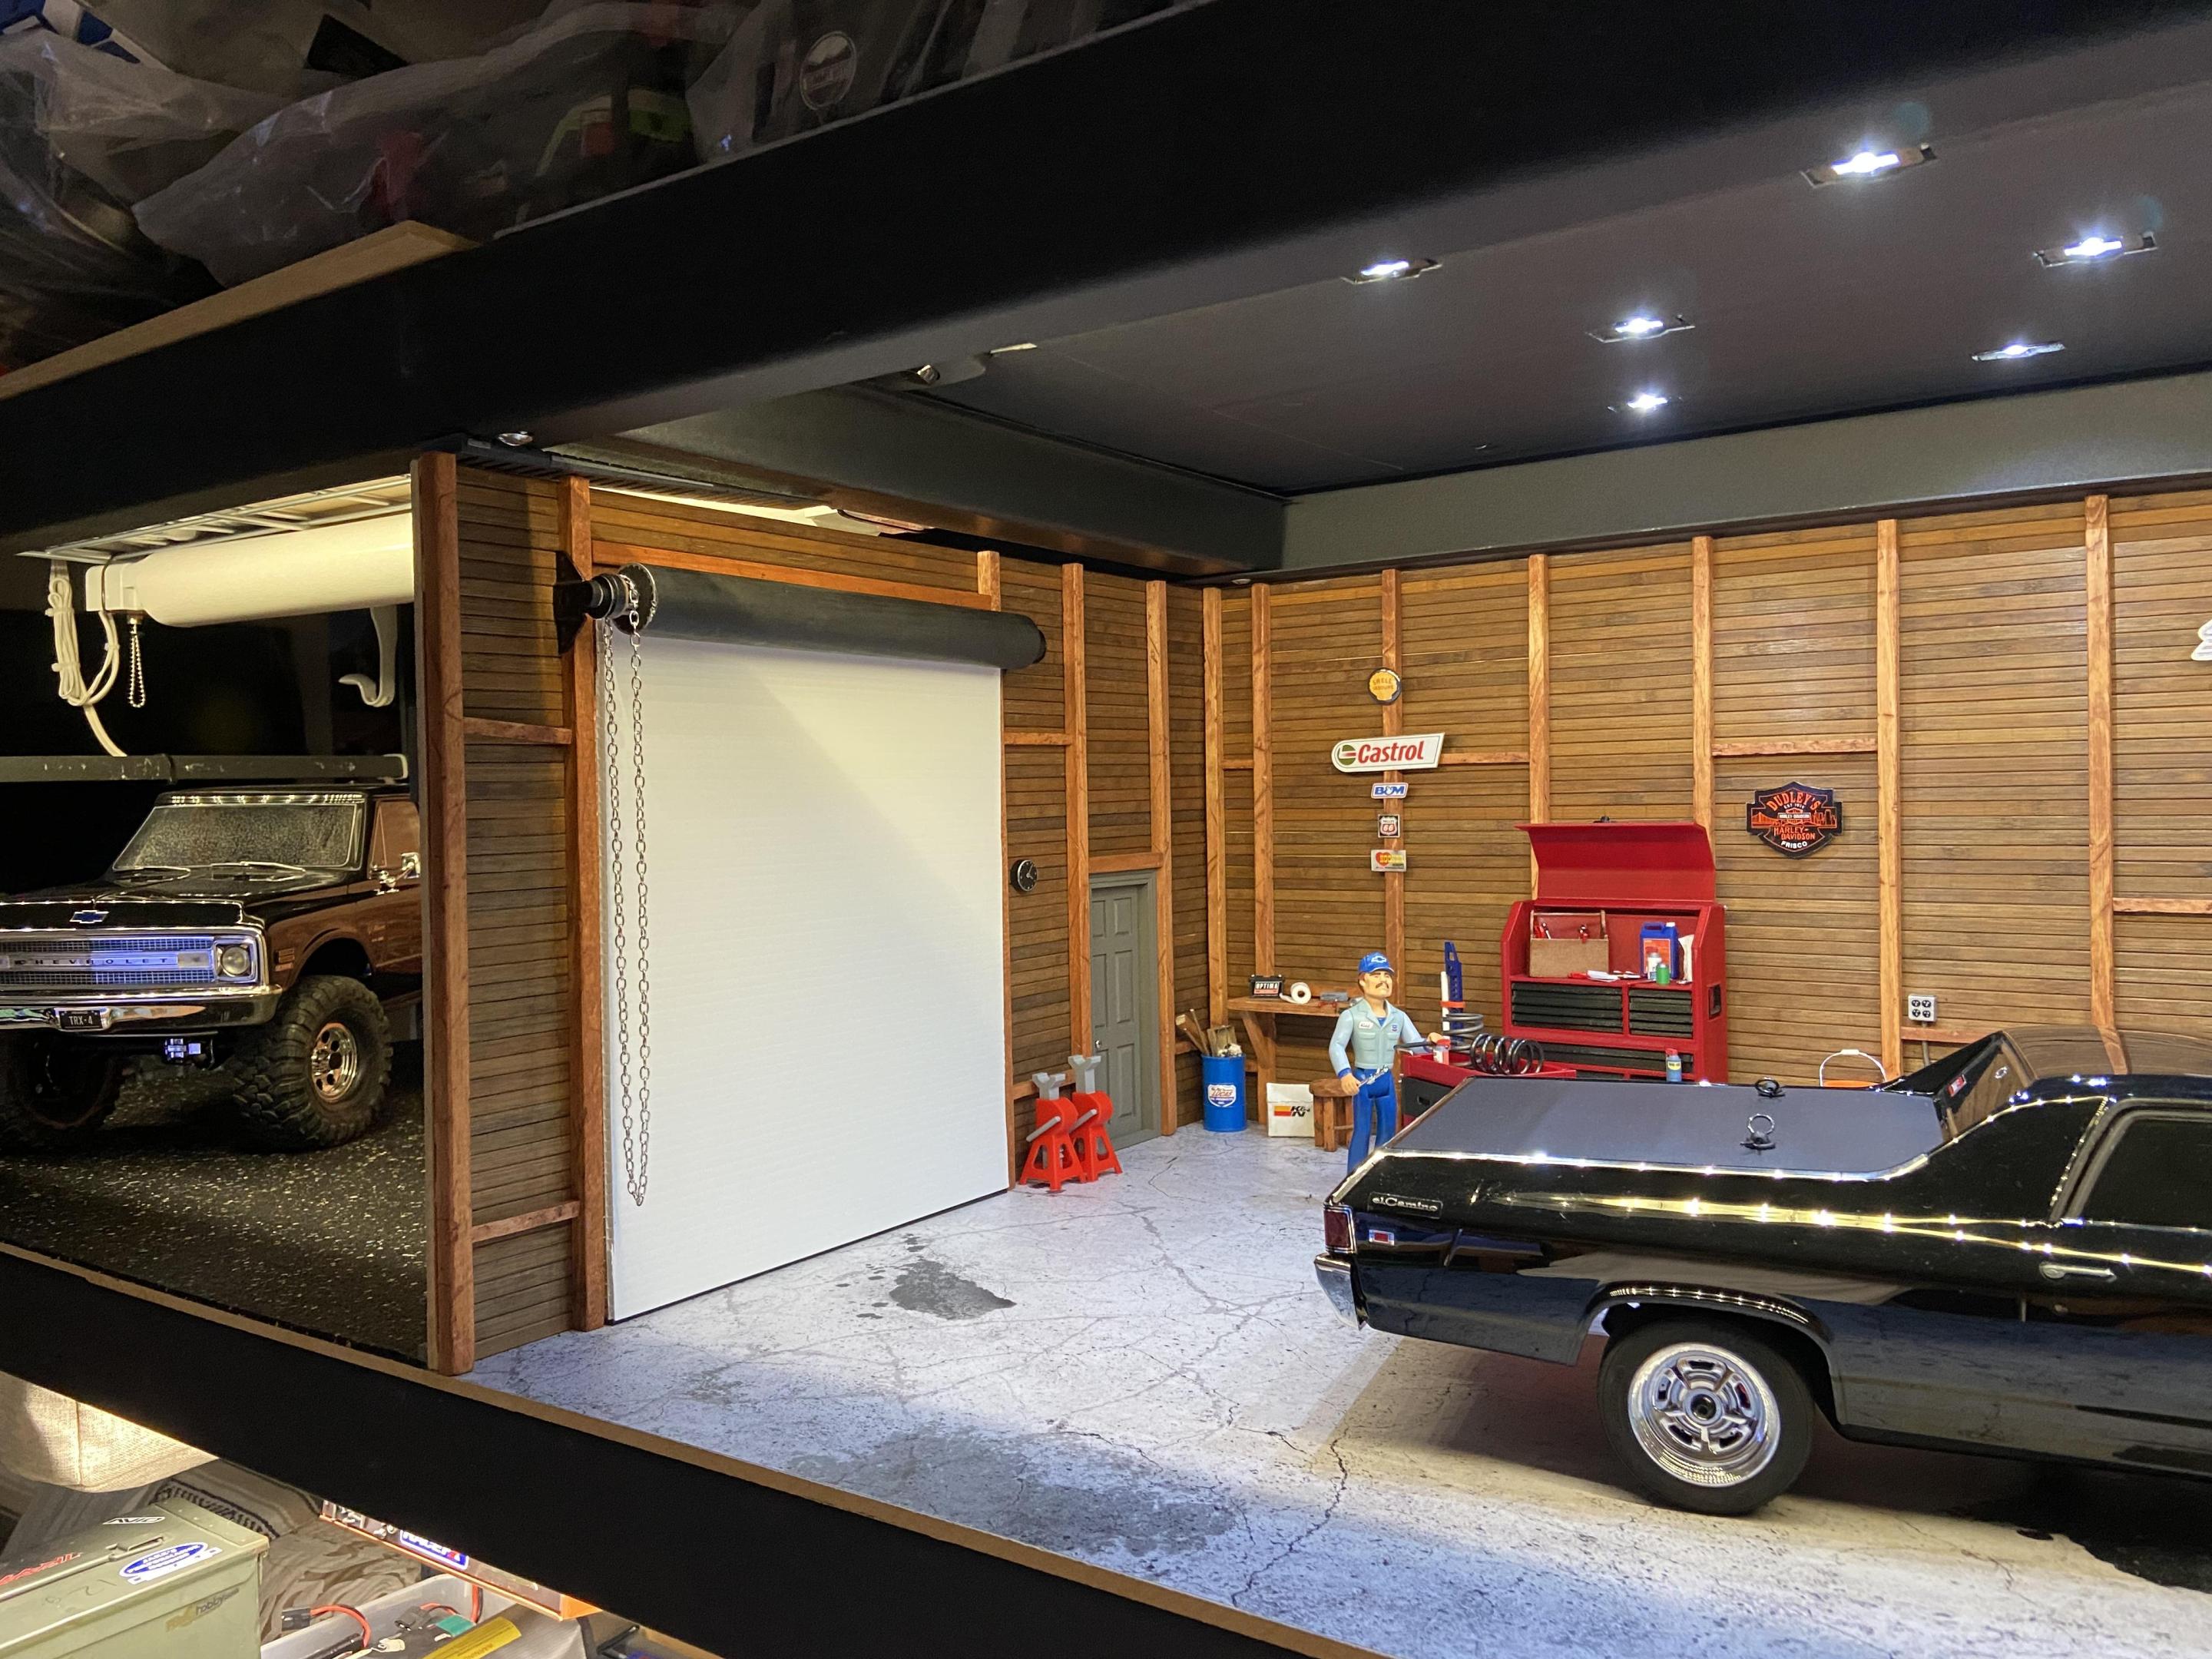 RC garage, somewhat 1/10 scale - Dioramas - Model Cars Magazine Forum